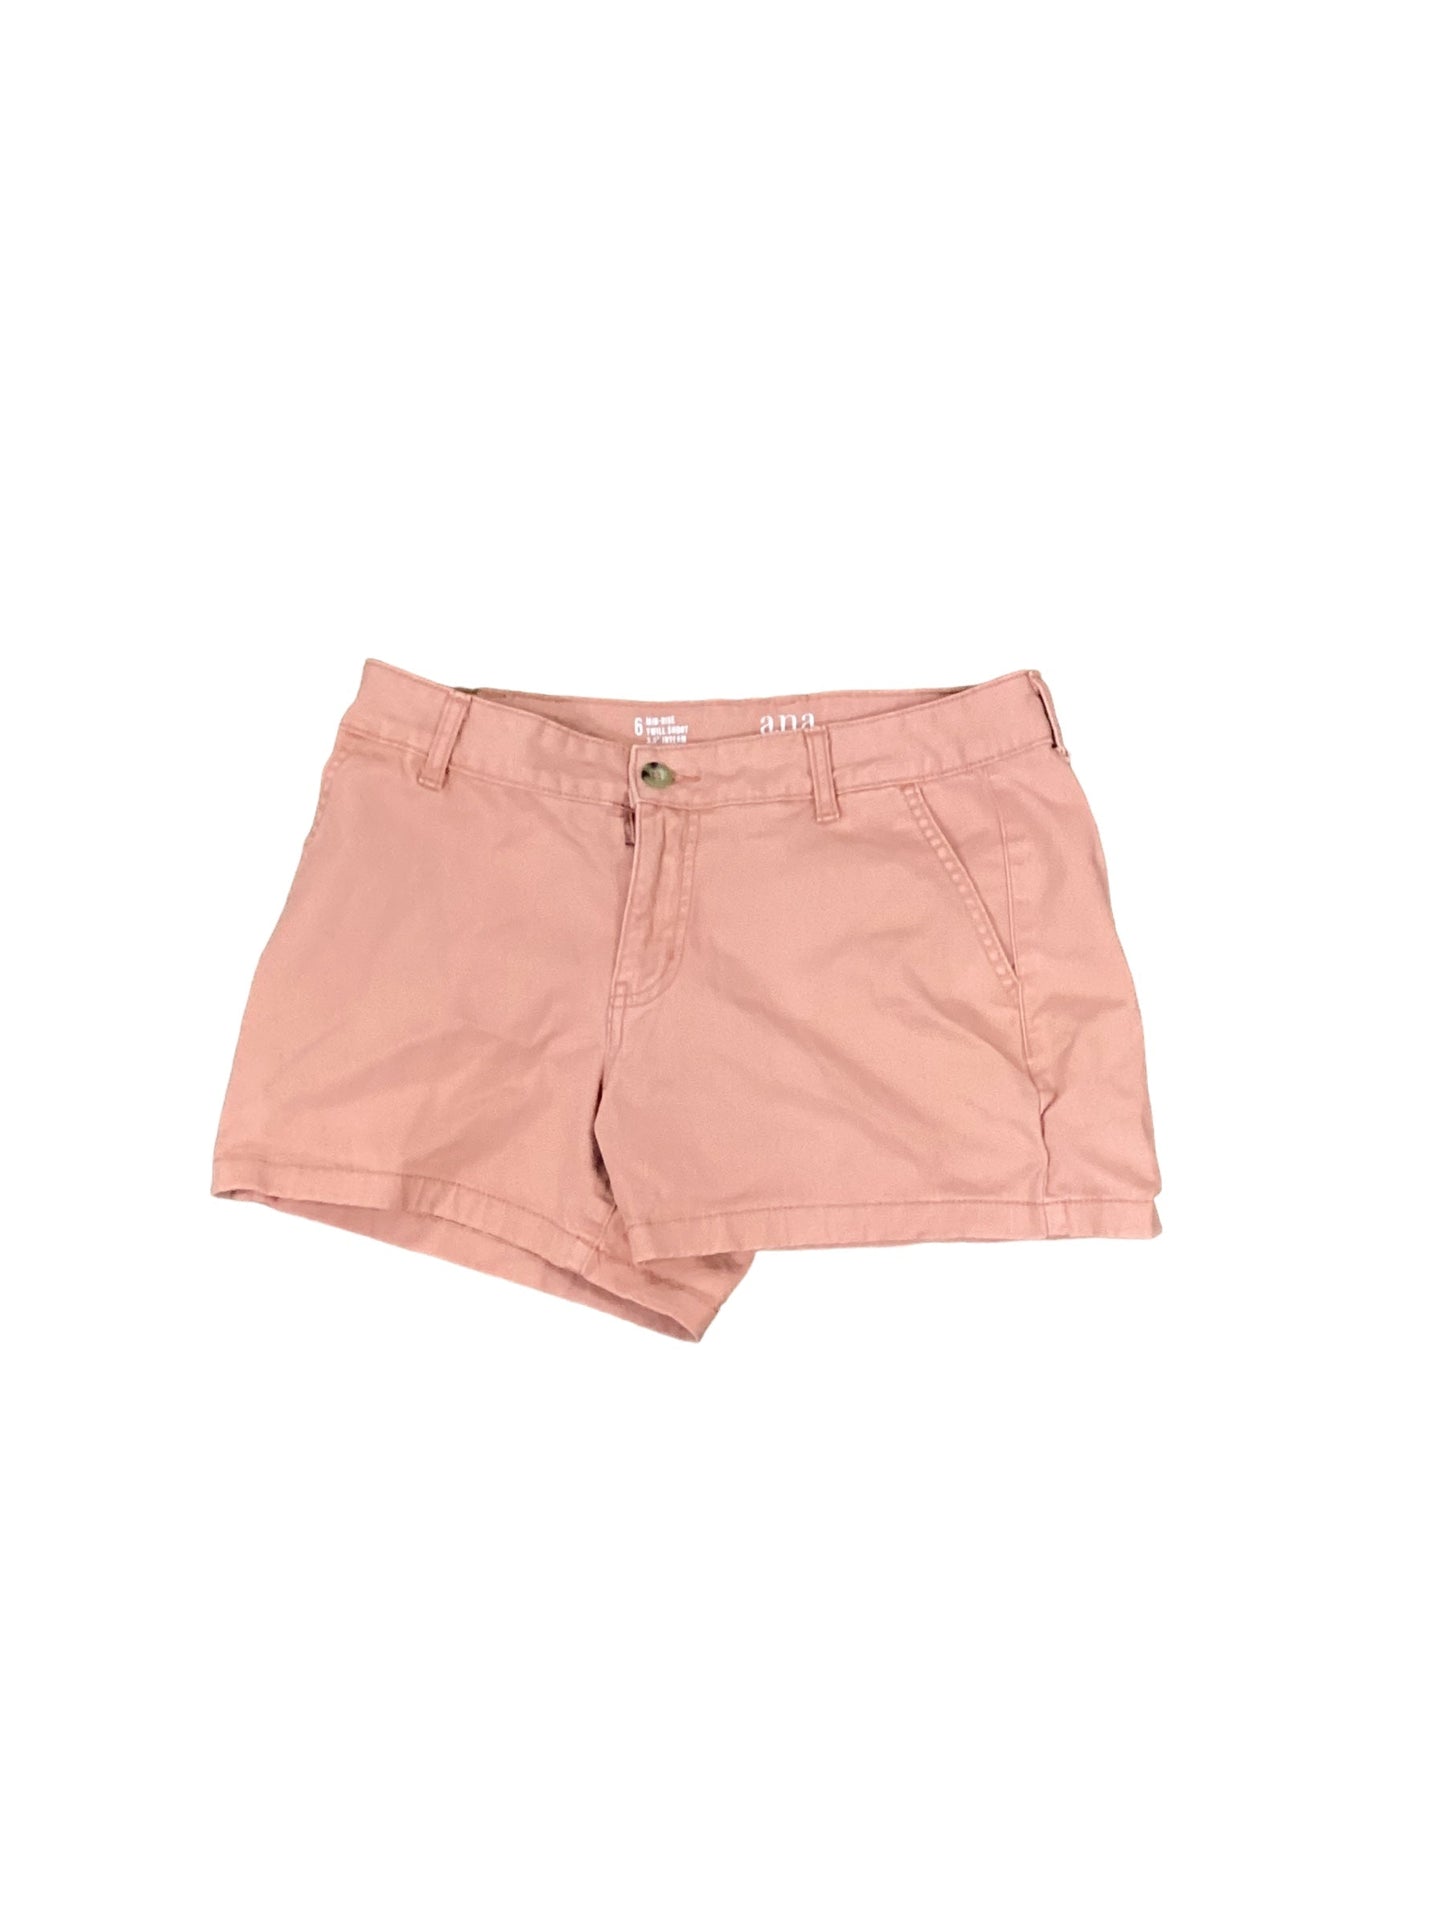 Peach Shorts Ana, Size 6